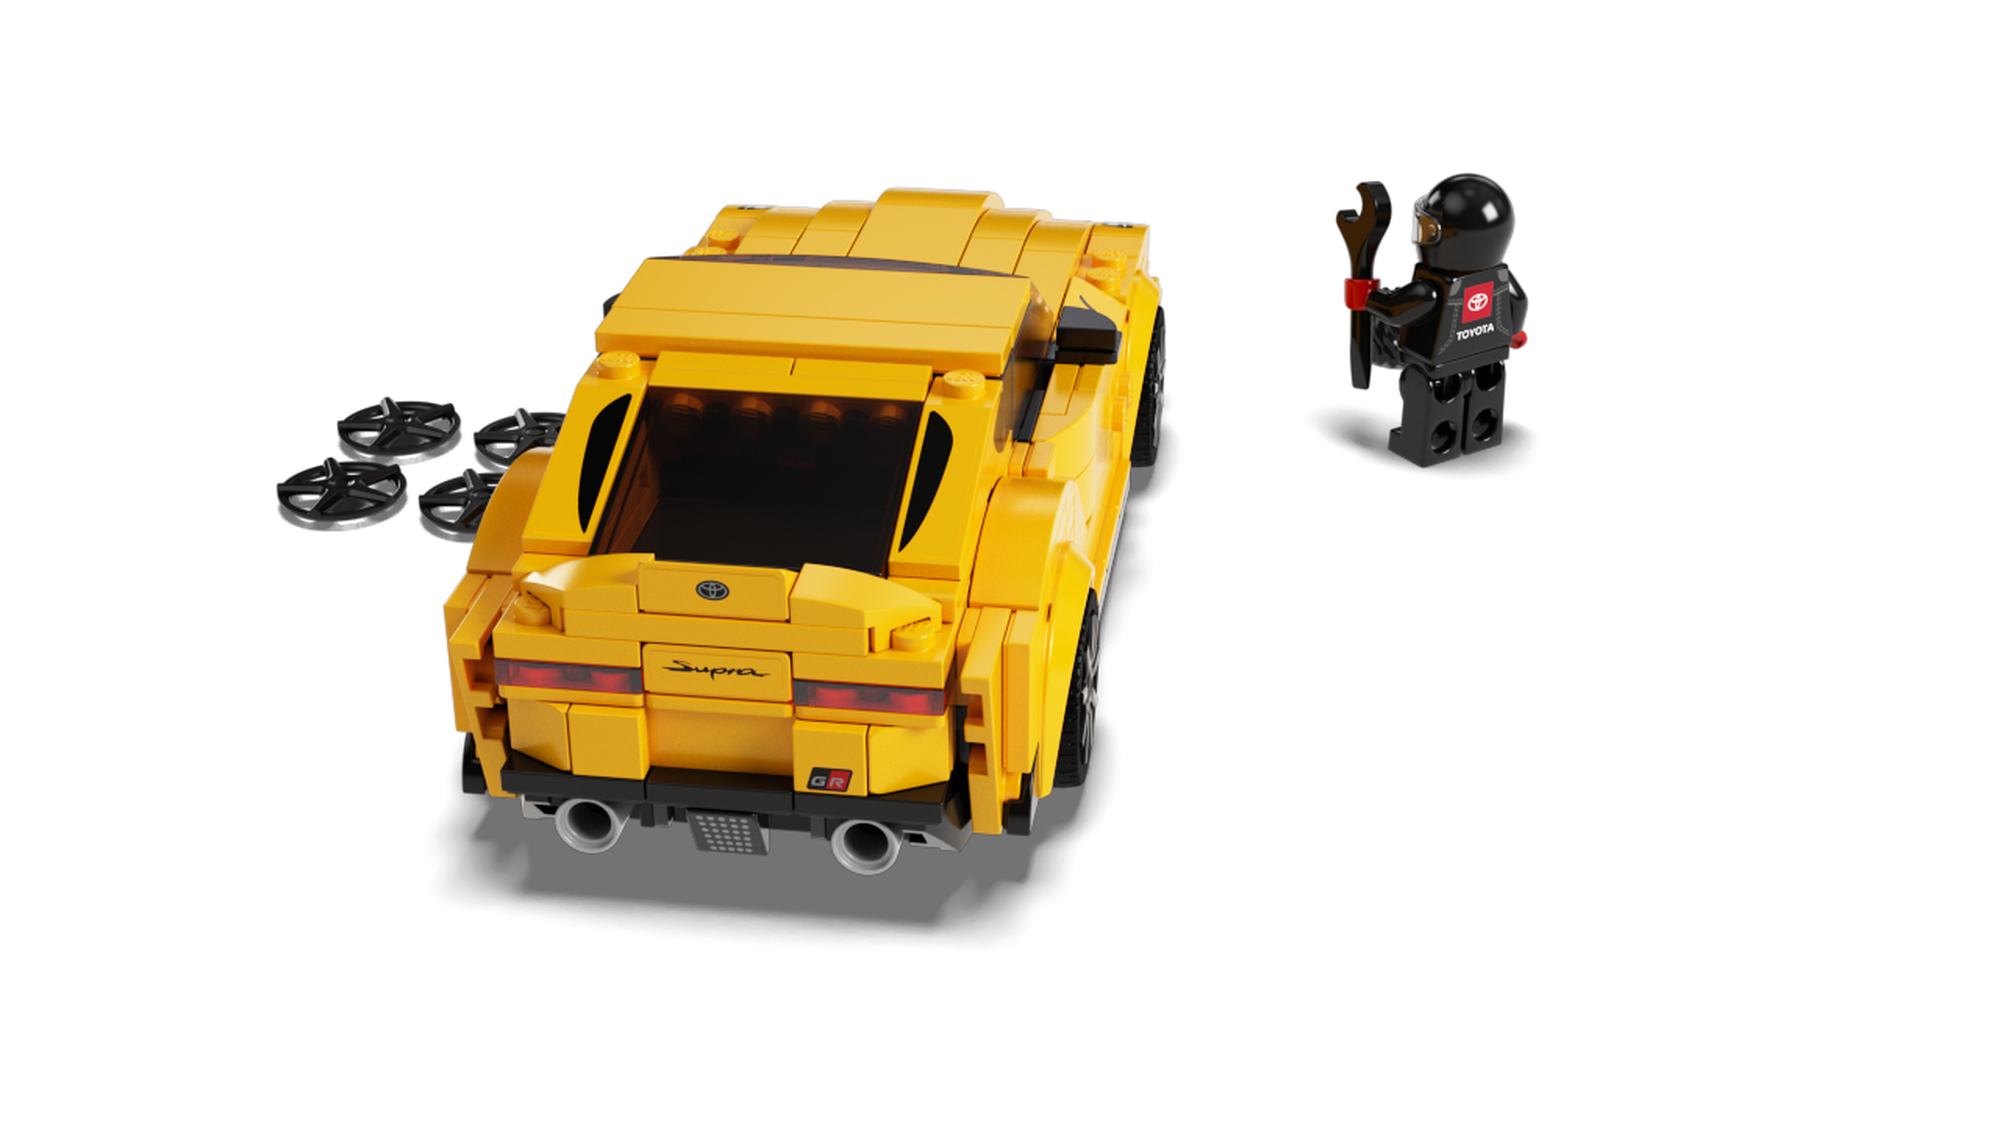 LEGO 76901 Toyota GR Supra, 5702016912470